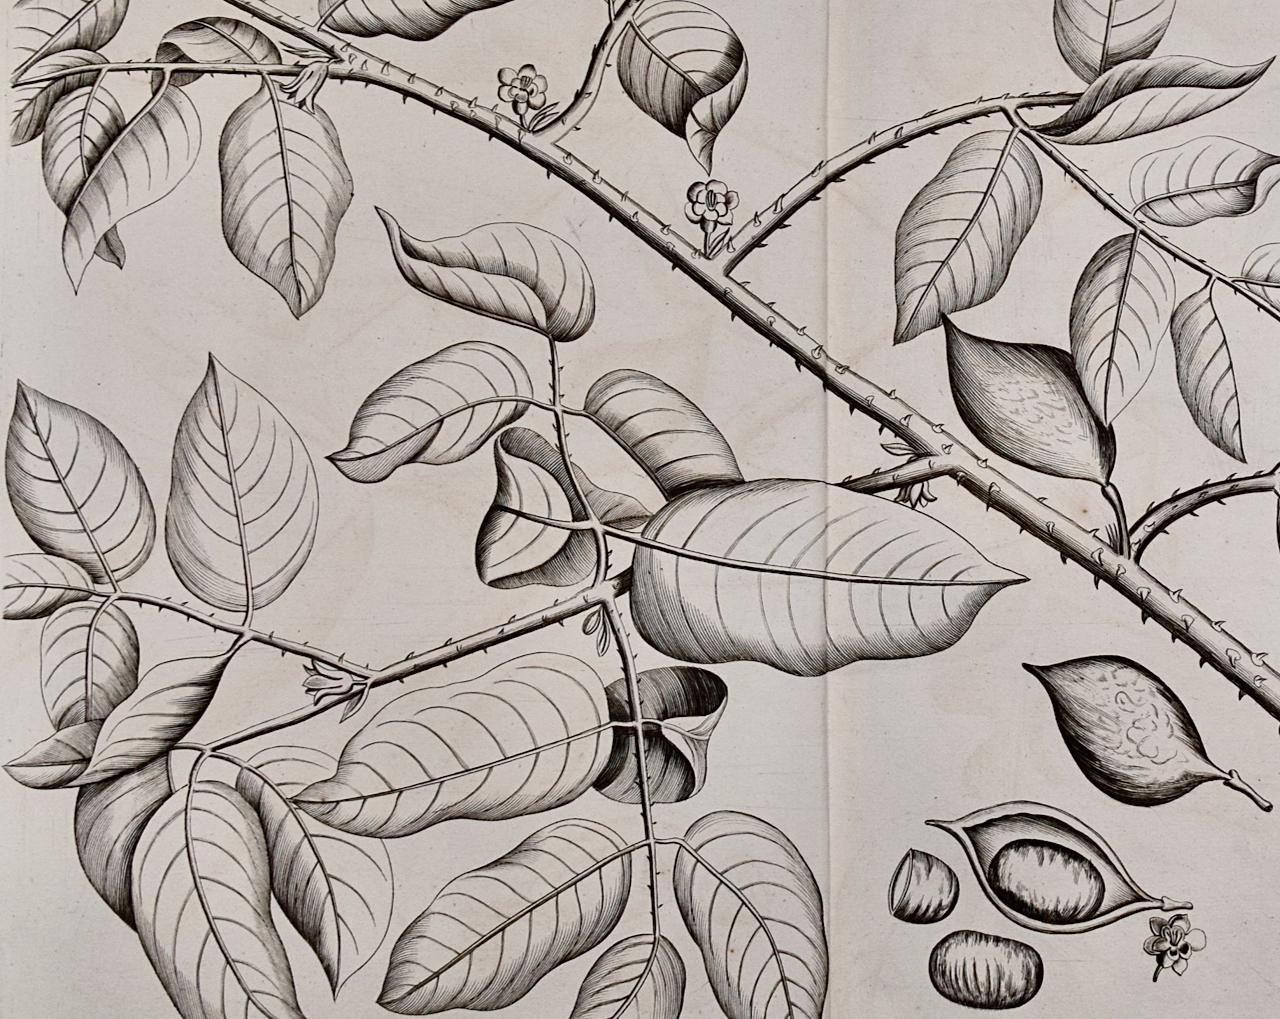 « Ban Caretti », plante à noix de fièvre « Ban Caretti » : gravure du XVIIe siècle de Hendrik van Rheede - Naturalisme Print par Hendrik Adriaan van Rheede tot Drakenstein